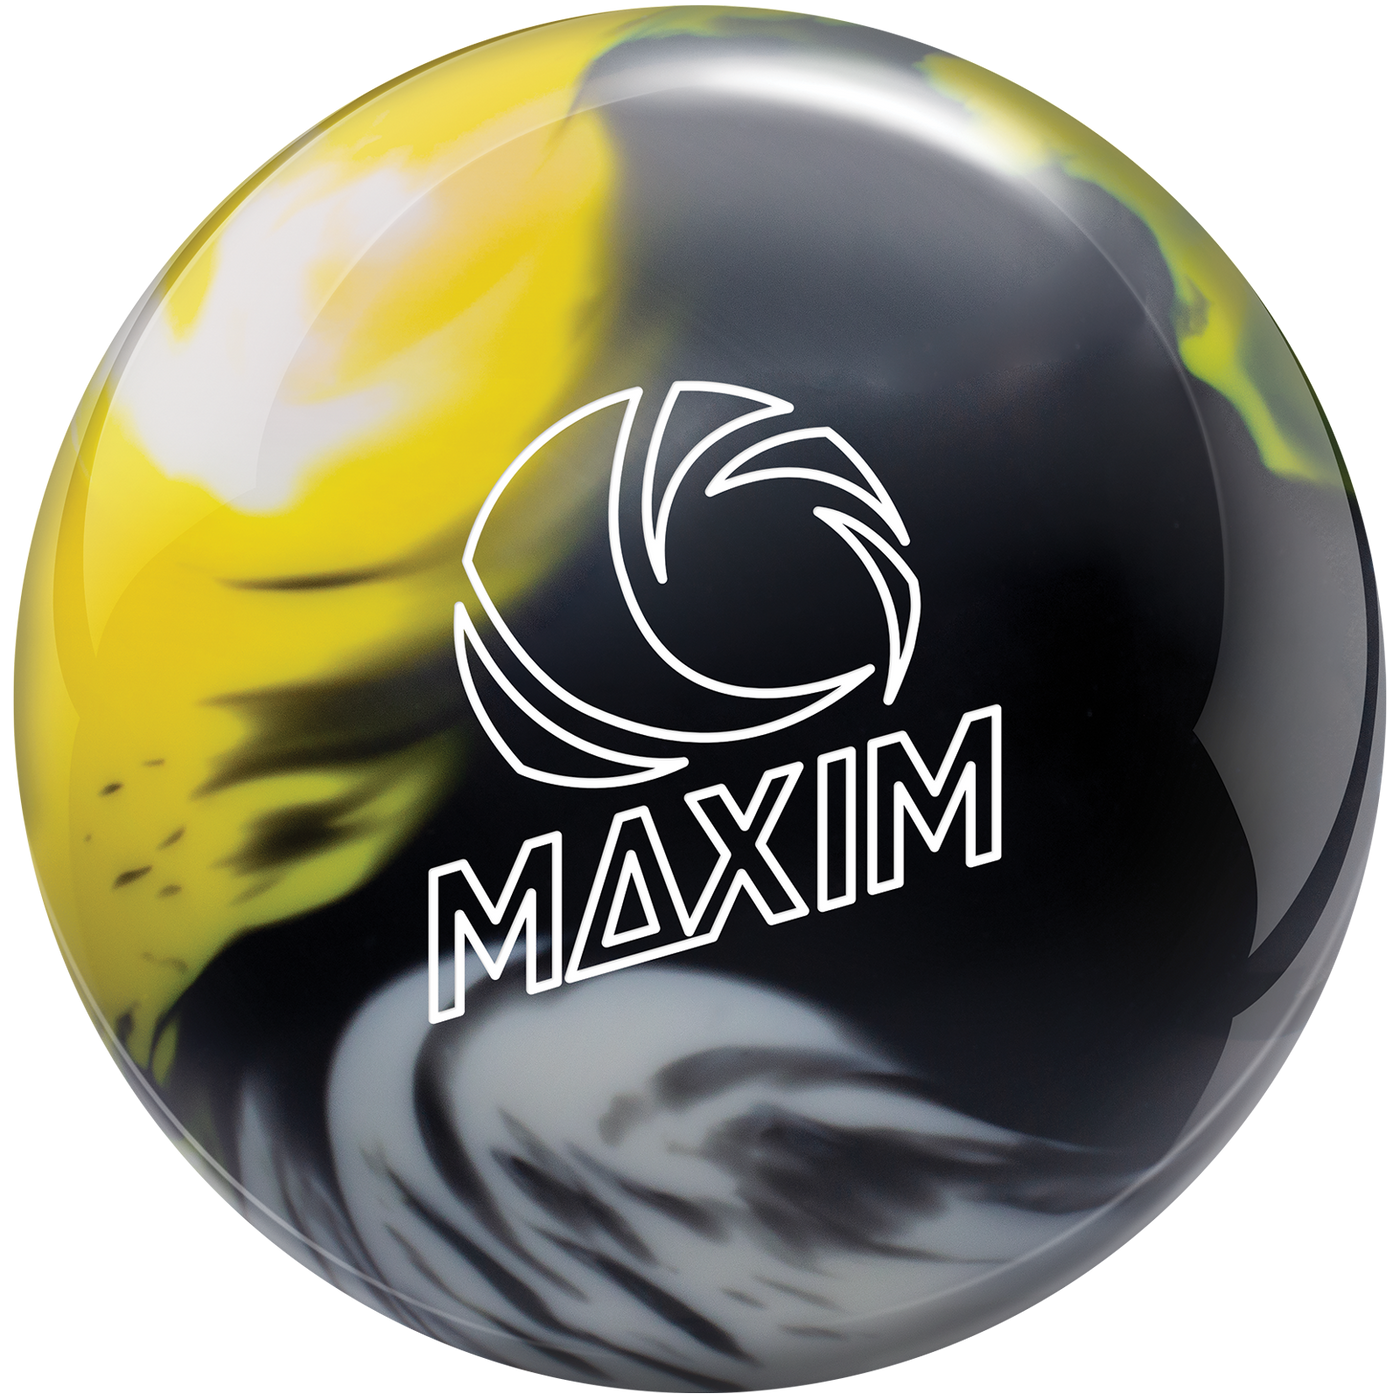 Maxim - Captain Sting bowling ball